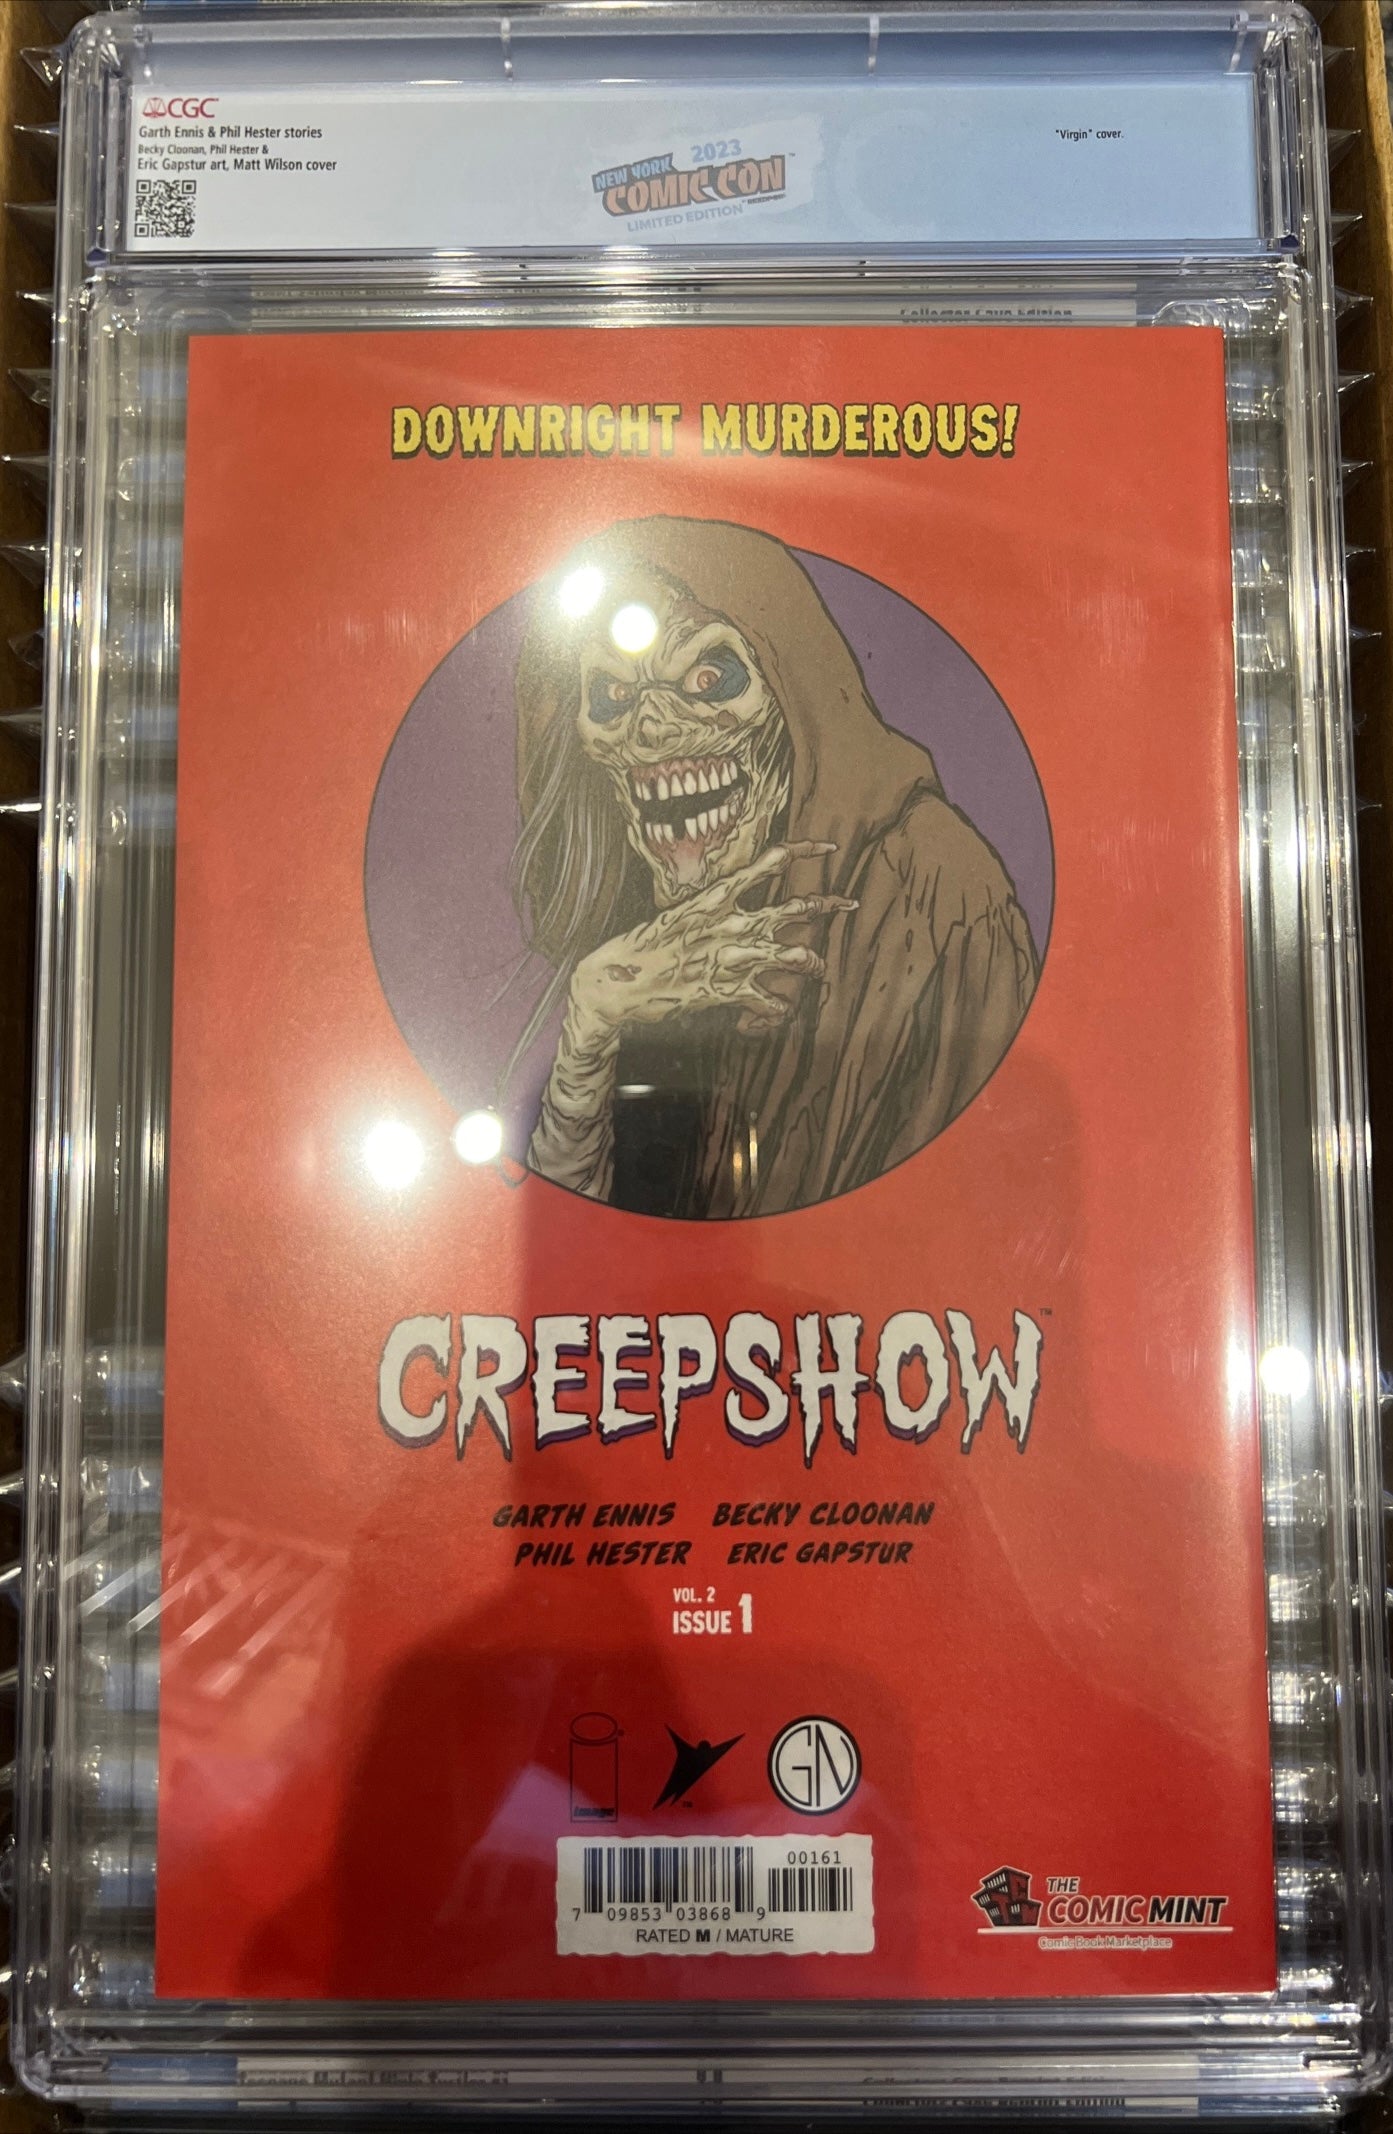 CREEPSHOW # 1 (vol. 2) CGC 9.8 (NYCC Matt Wilson Virgin Variant, Limited to 200)